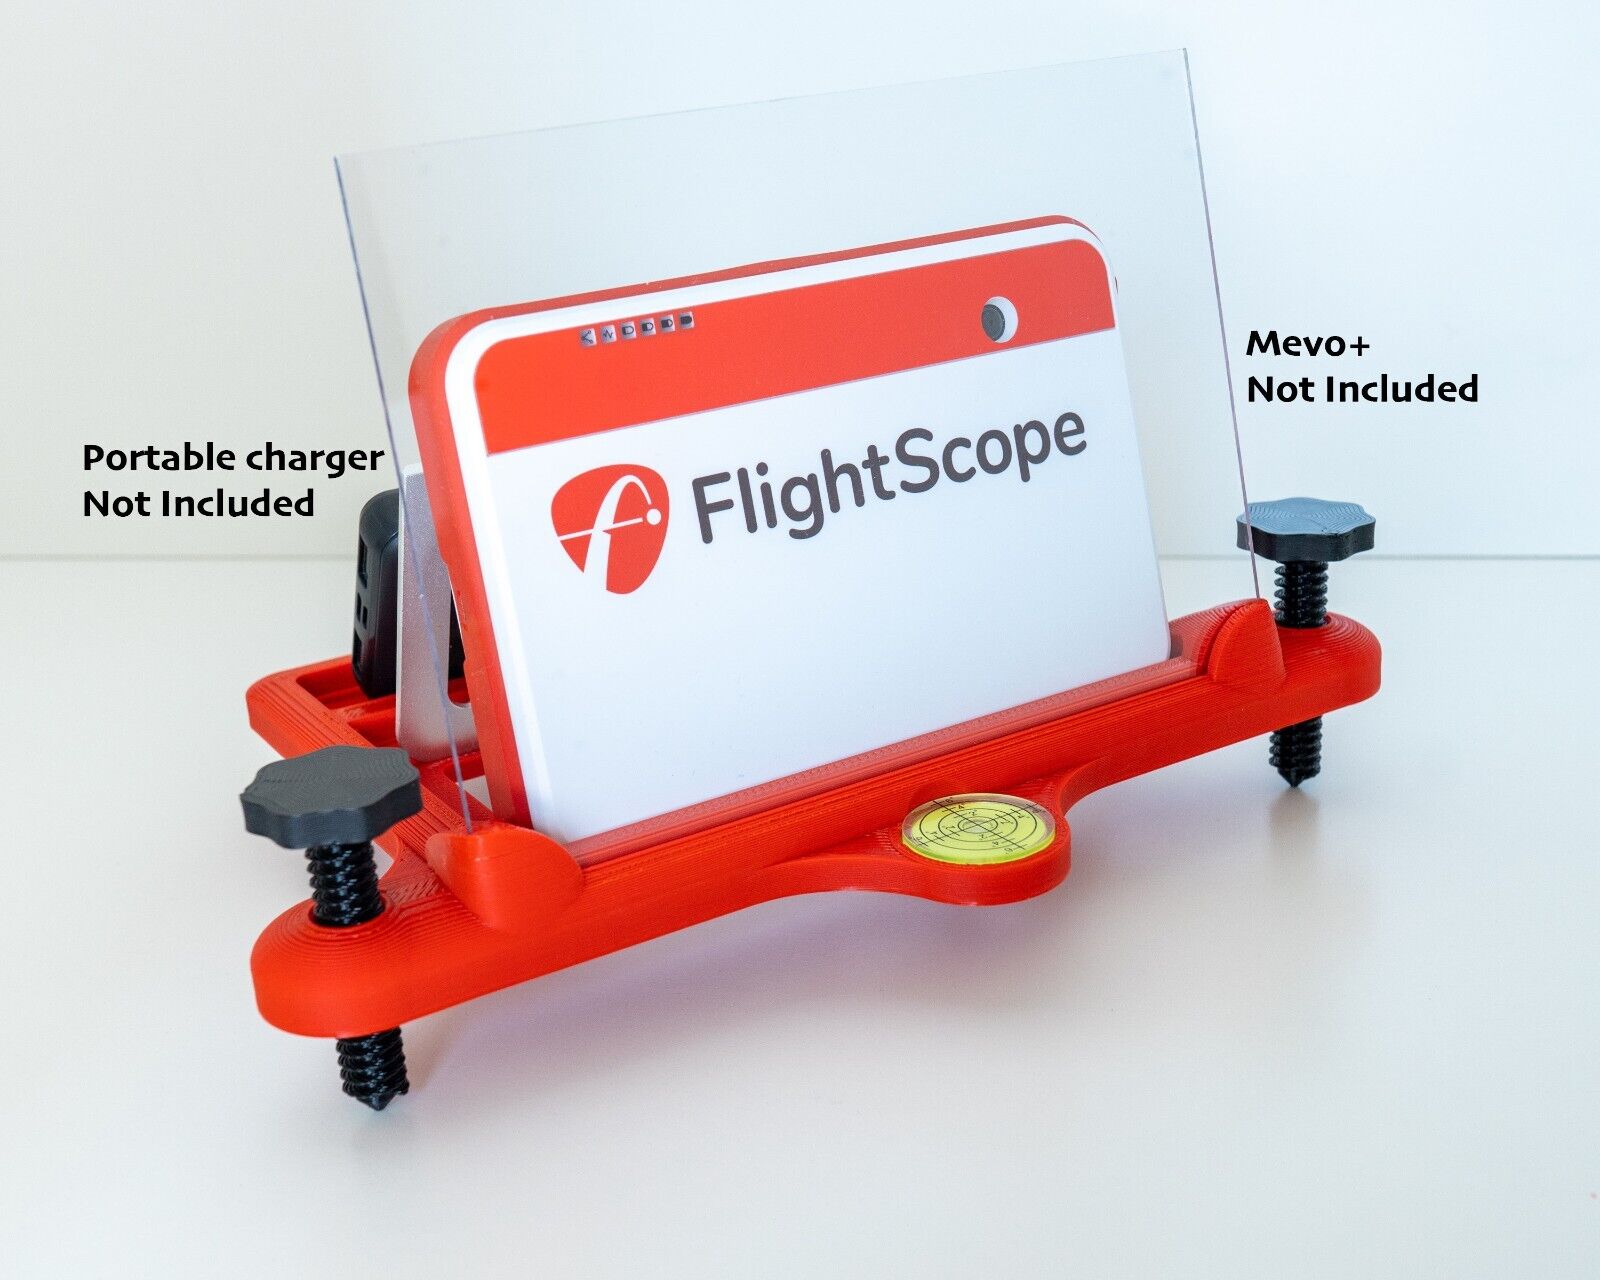 Adjustable Alignment & Leveling Dock Stand for FlightScope Mevo Plus / Mevo+